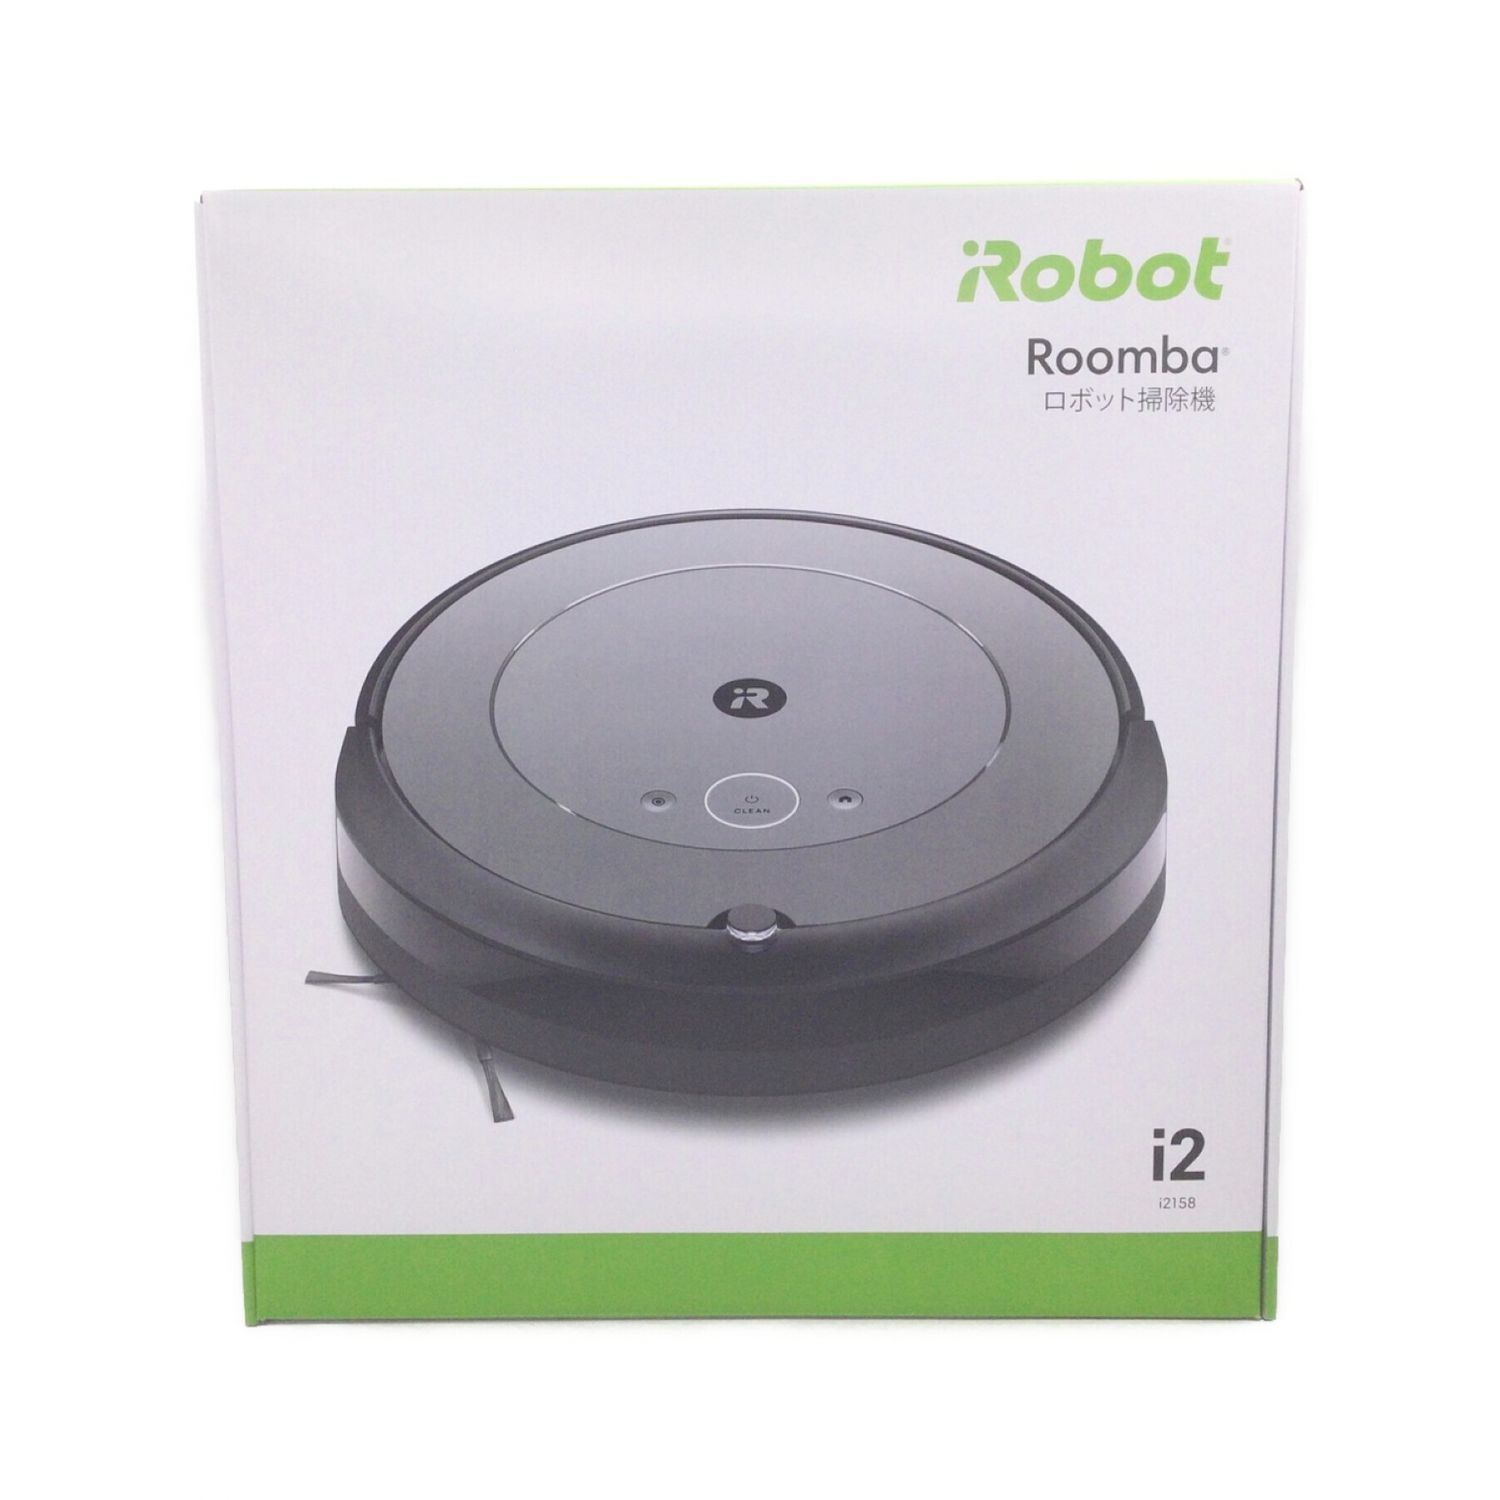 IROBOTiRobot Roomba ルンバ i2158 ロボット掃除機 新品未使用 - 掃除機